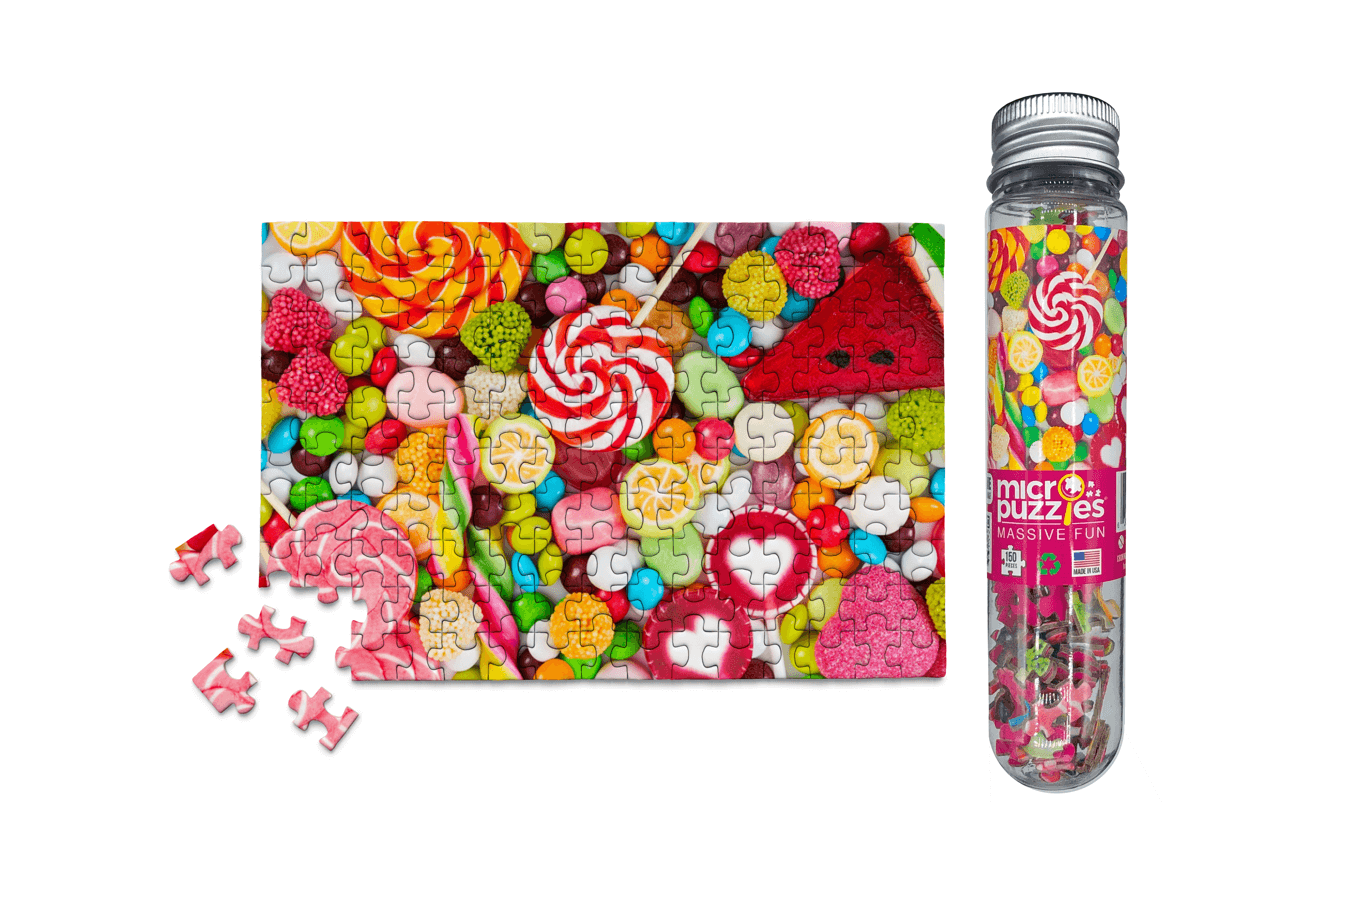 Candy Mini Jigsaw Puzzle - Great impulse buy